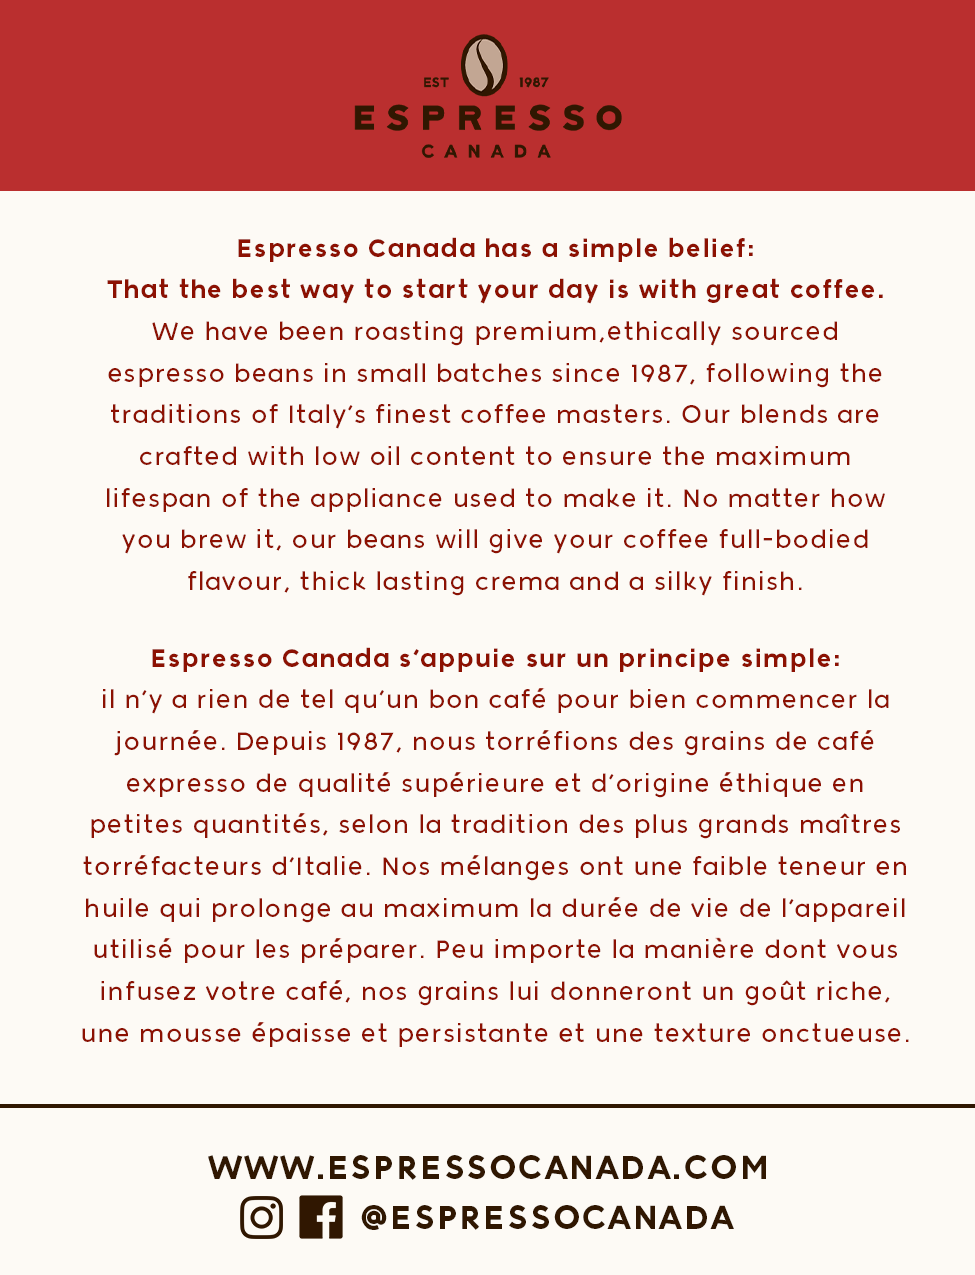 Espresso Canada Coffee Label Descriptions